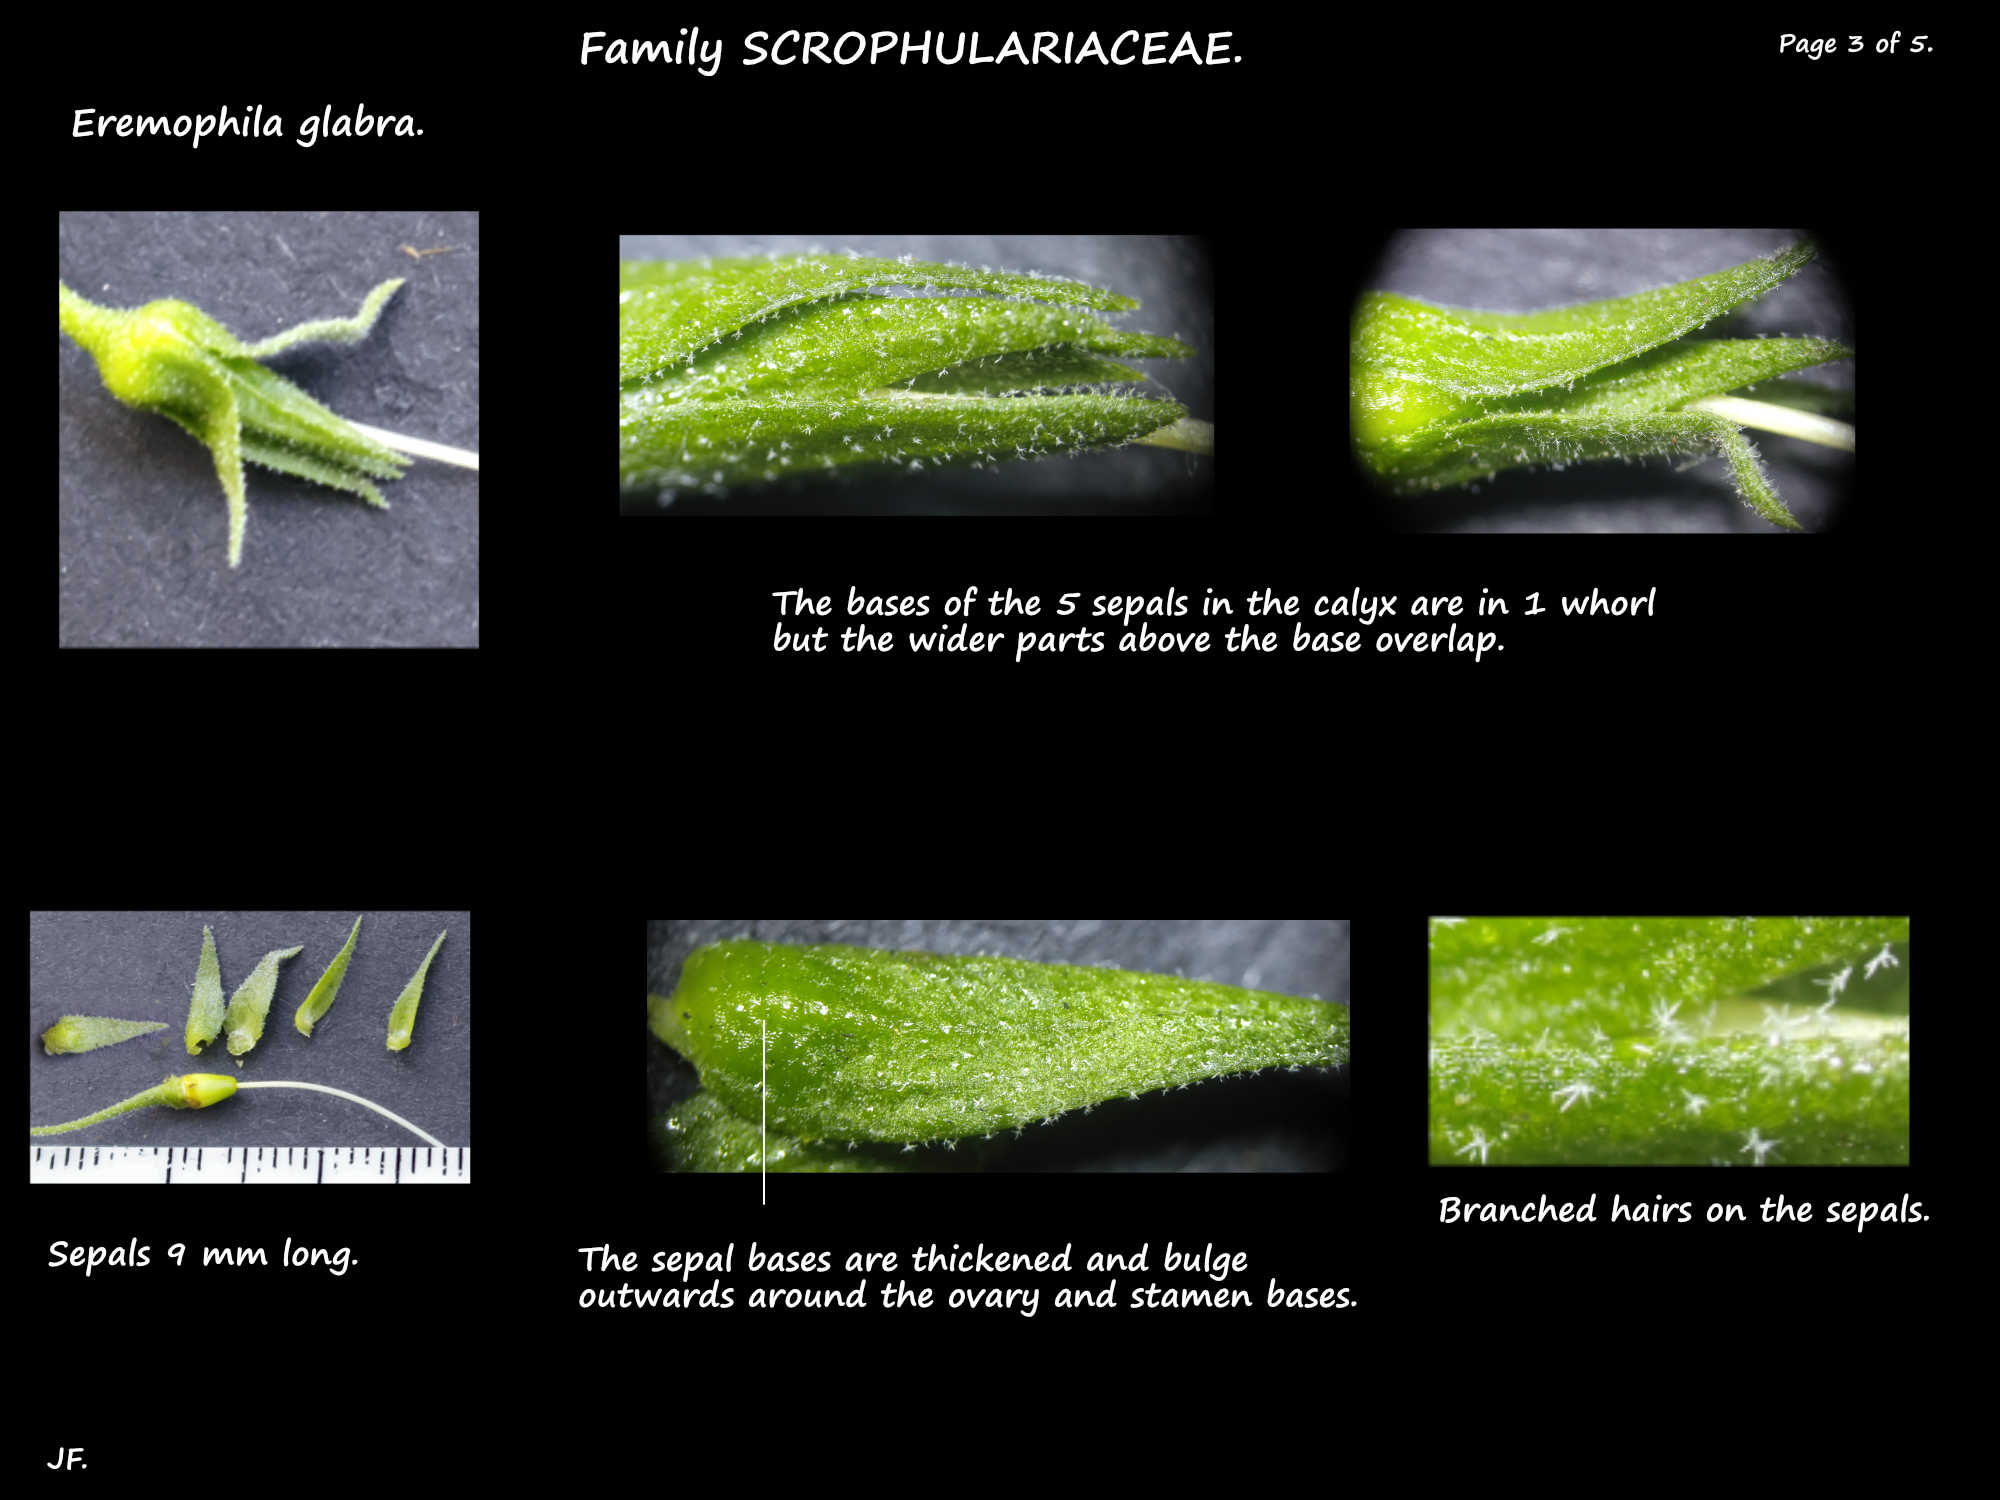 3 The hairy sepals of Eremophila glabra